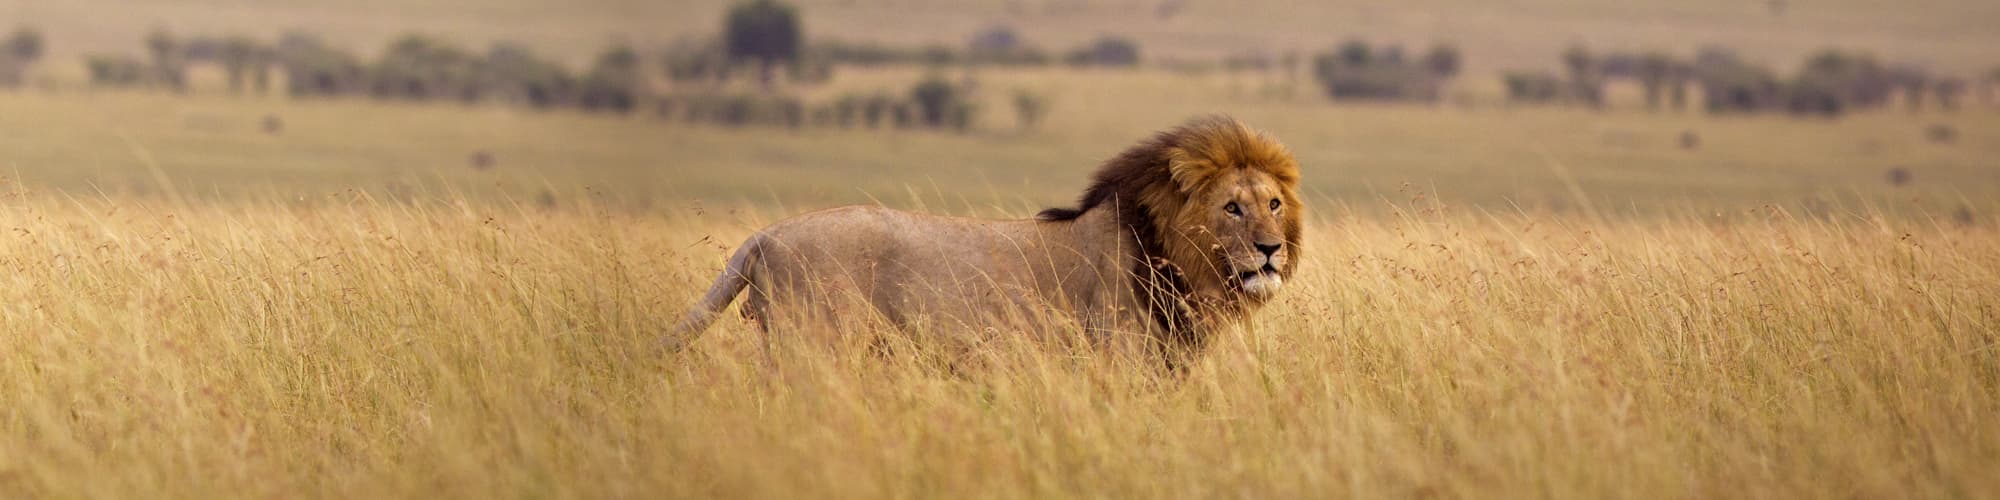 Safari Kenya © WL Davies / Istock